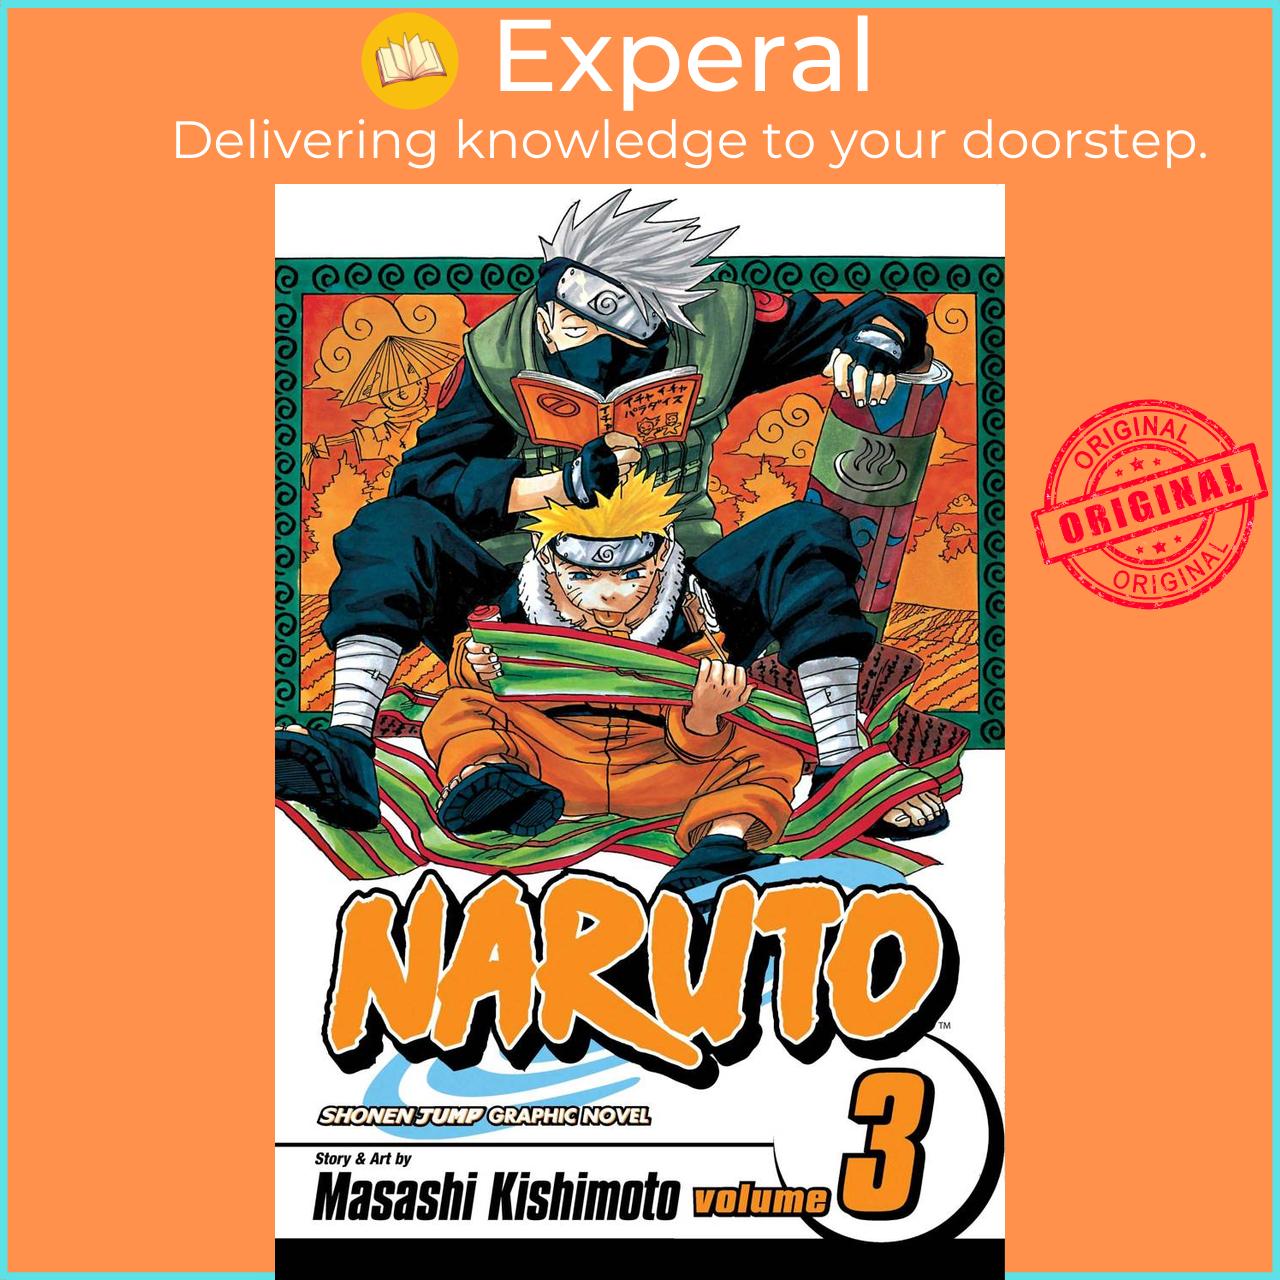 Sách - Naruto, Vol. 3 by Masashi Kishimoto (US edition, paperback)